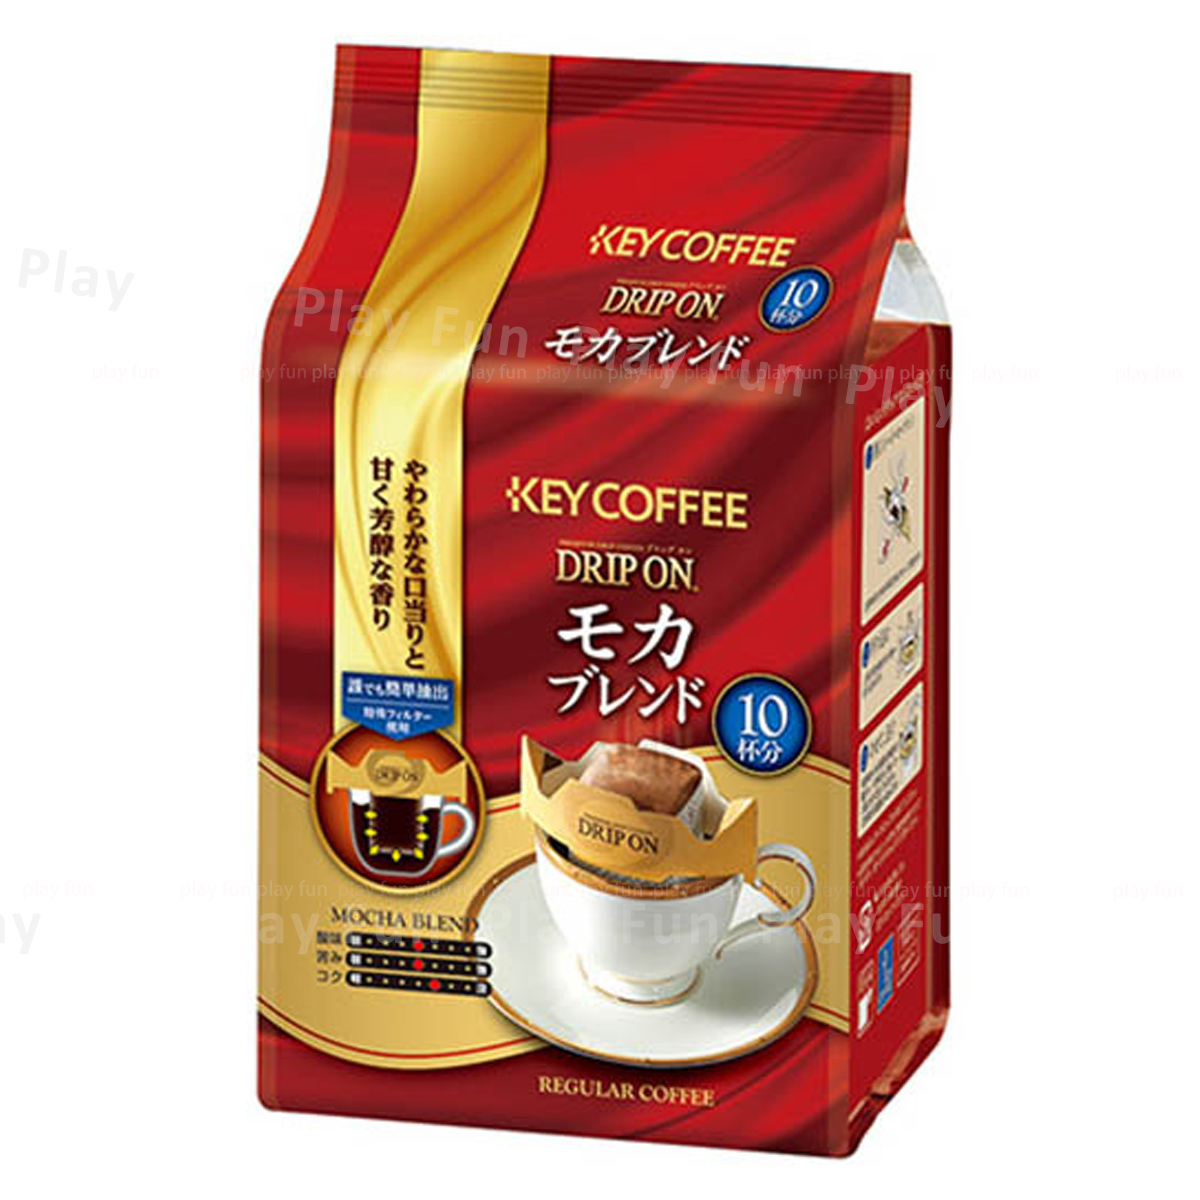 KEY COFFEE - Drip On 掛耳式濾泡摩卡咖啡 (8g x 10包)